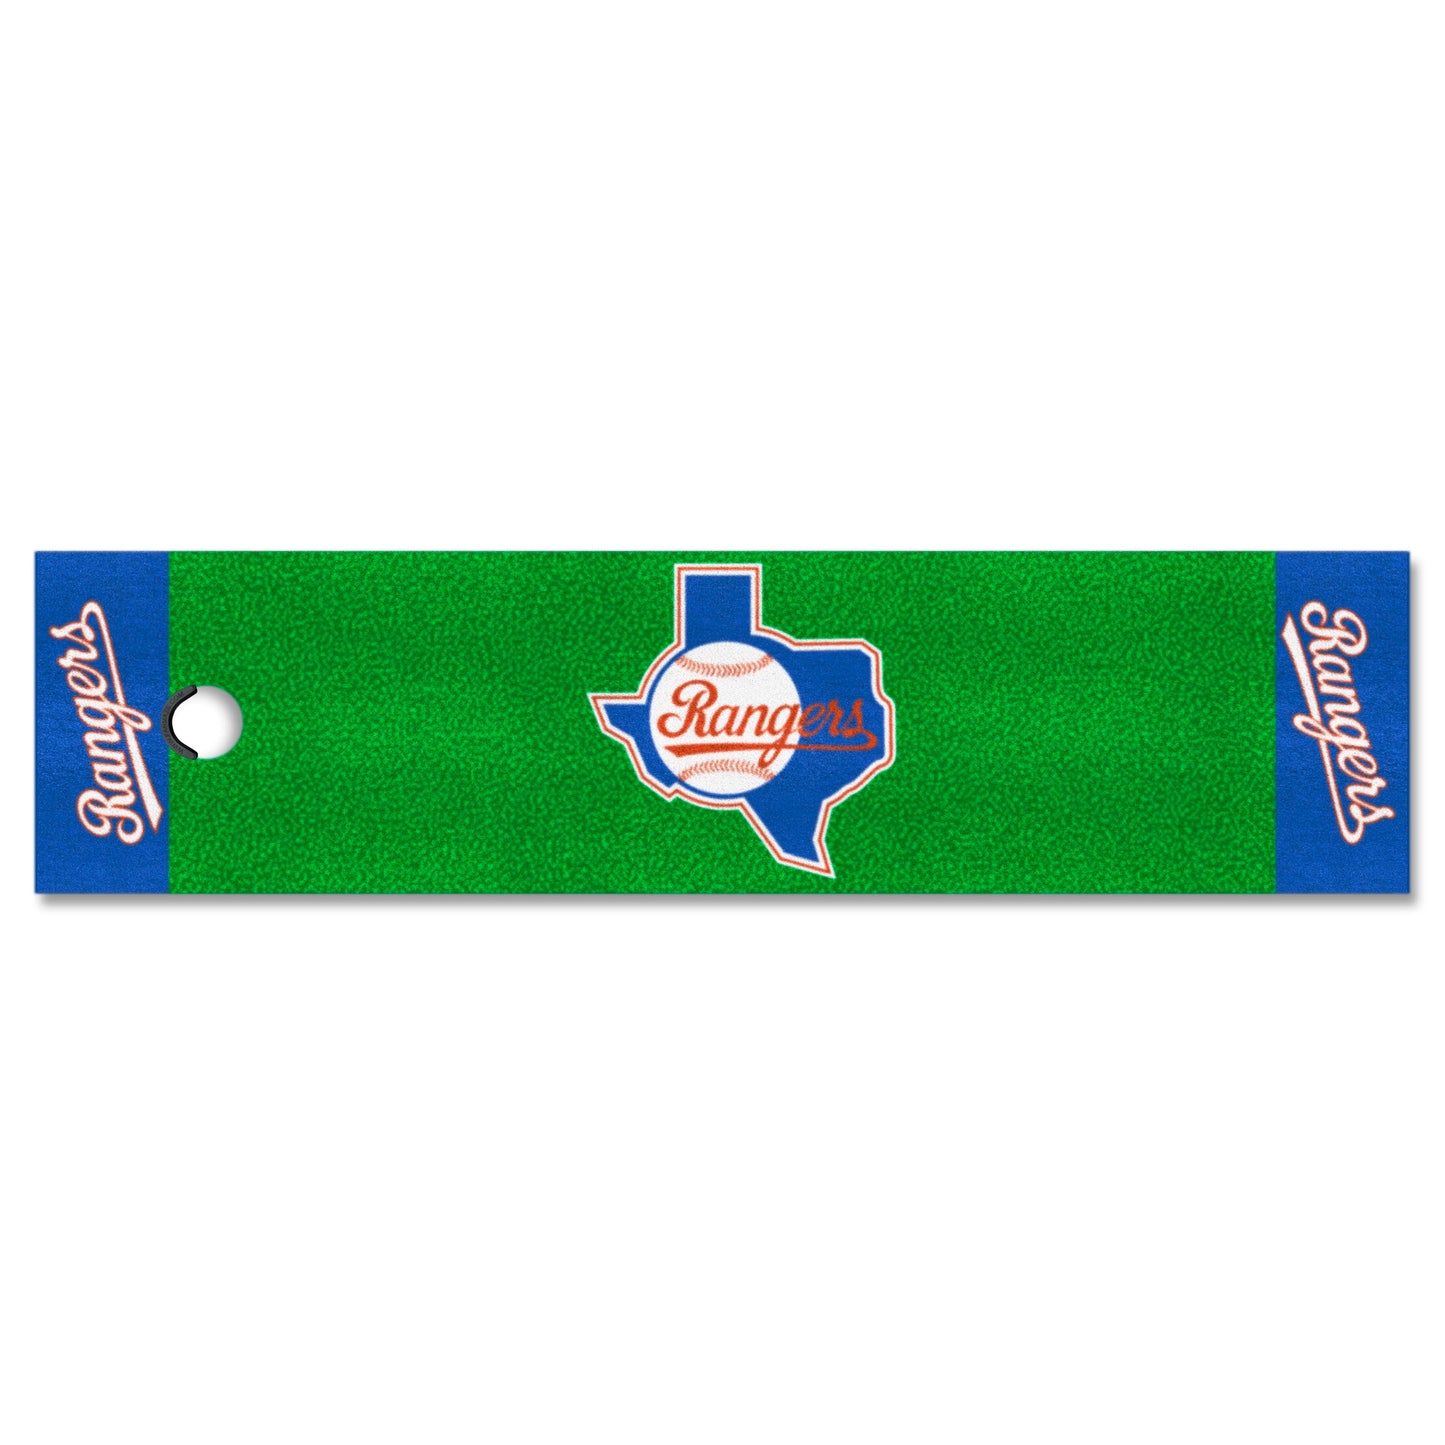 Texas Rangers Putting Green Mat - 1.5ft. x 6ft. - Retro Collection, 1984 Texas Rangers